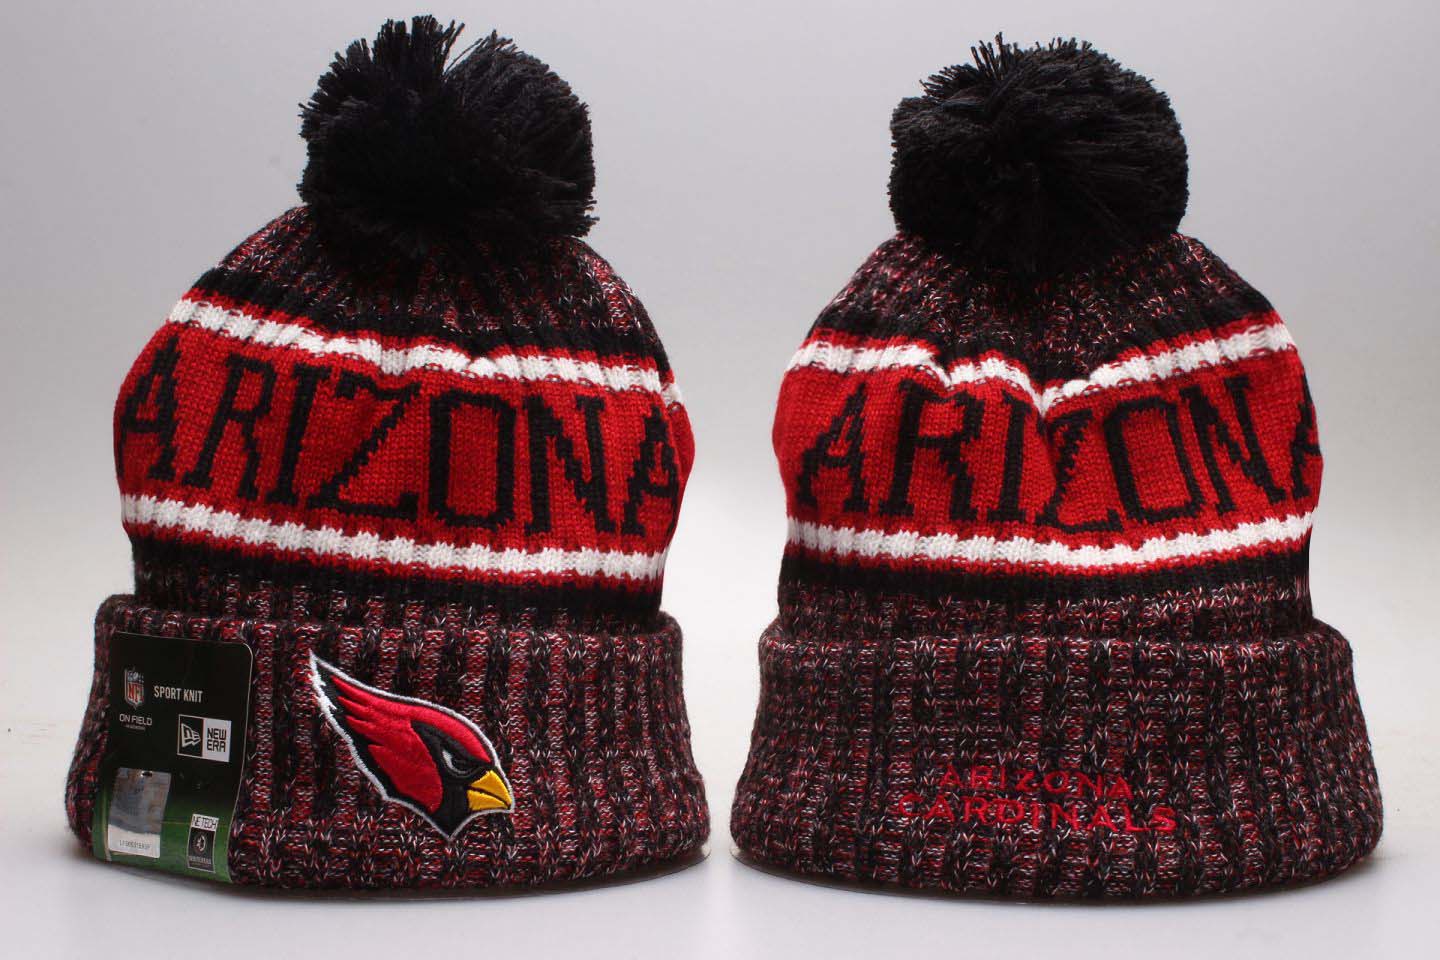 Arizona Cardinals Red Wordmark Cuffed Pom Knit Hat YP